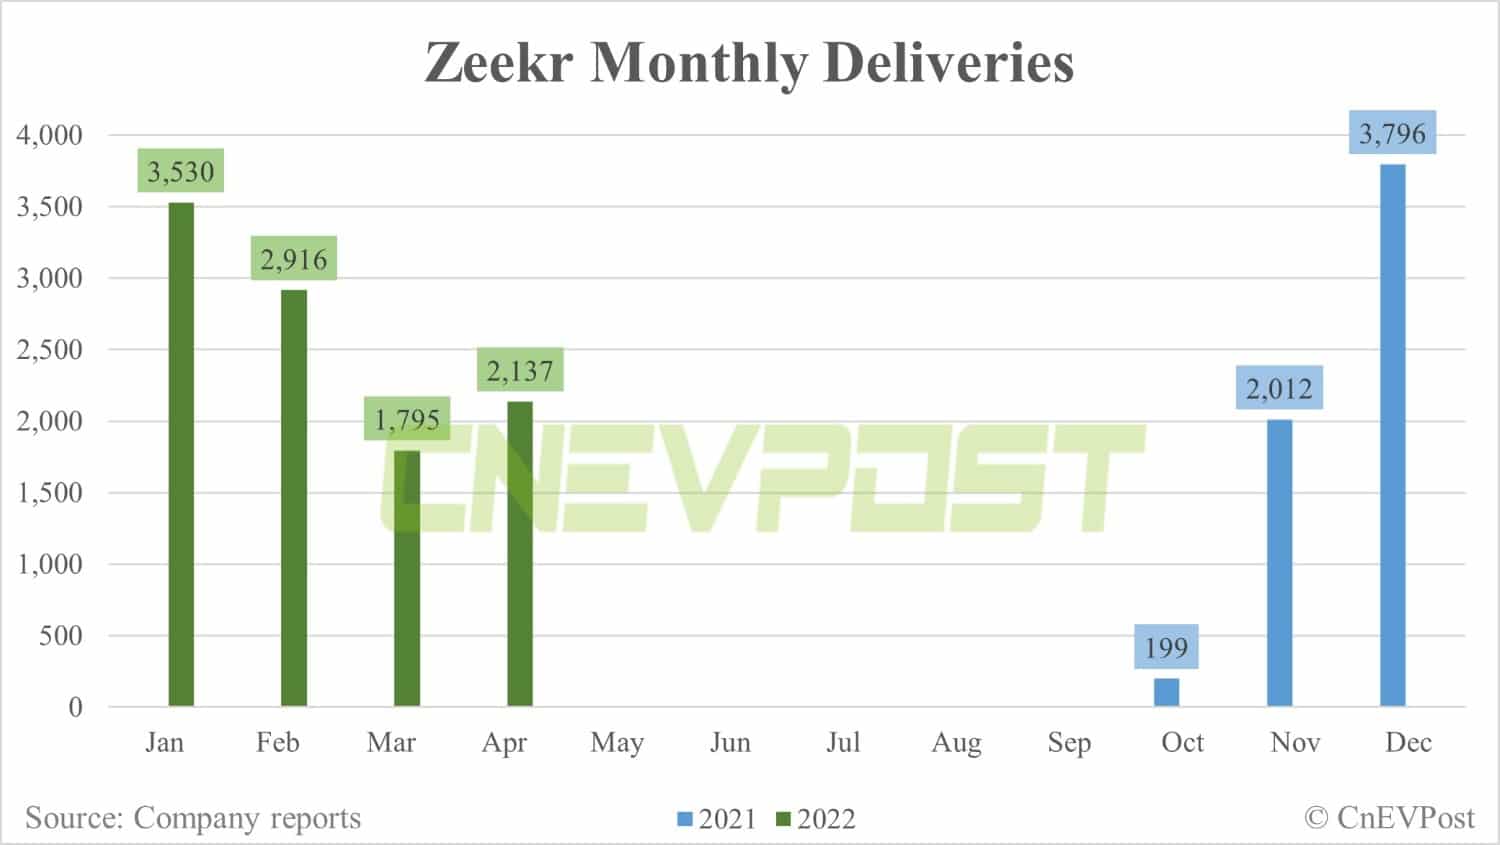 Zeekr reaches 20,000th Zeekr 001 delivery milestone-CnEVPost